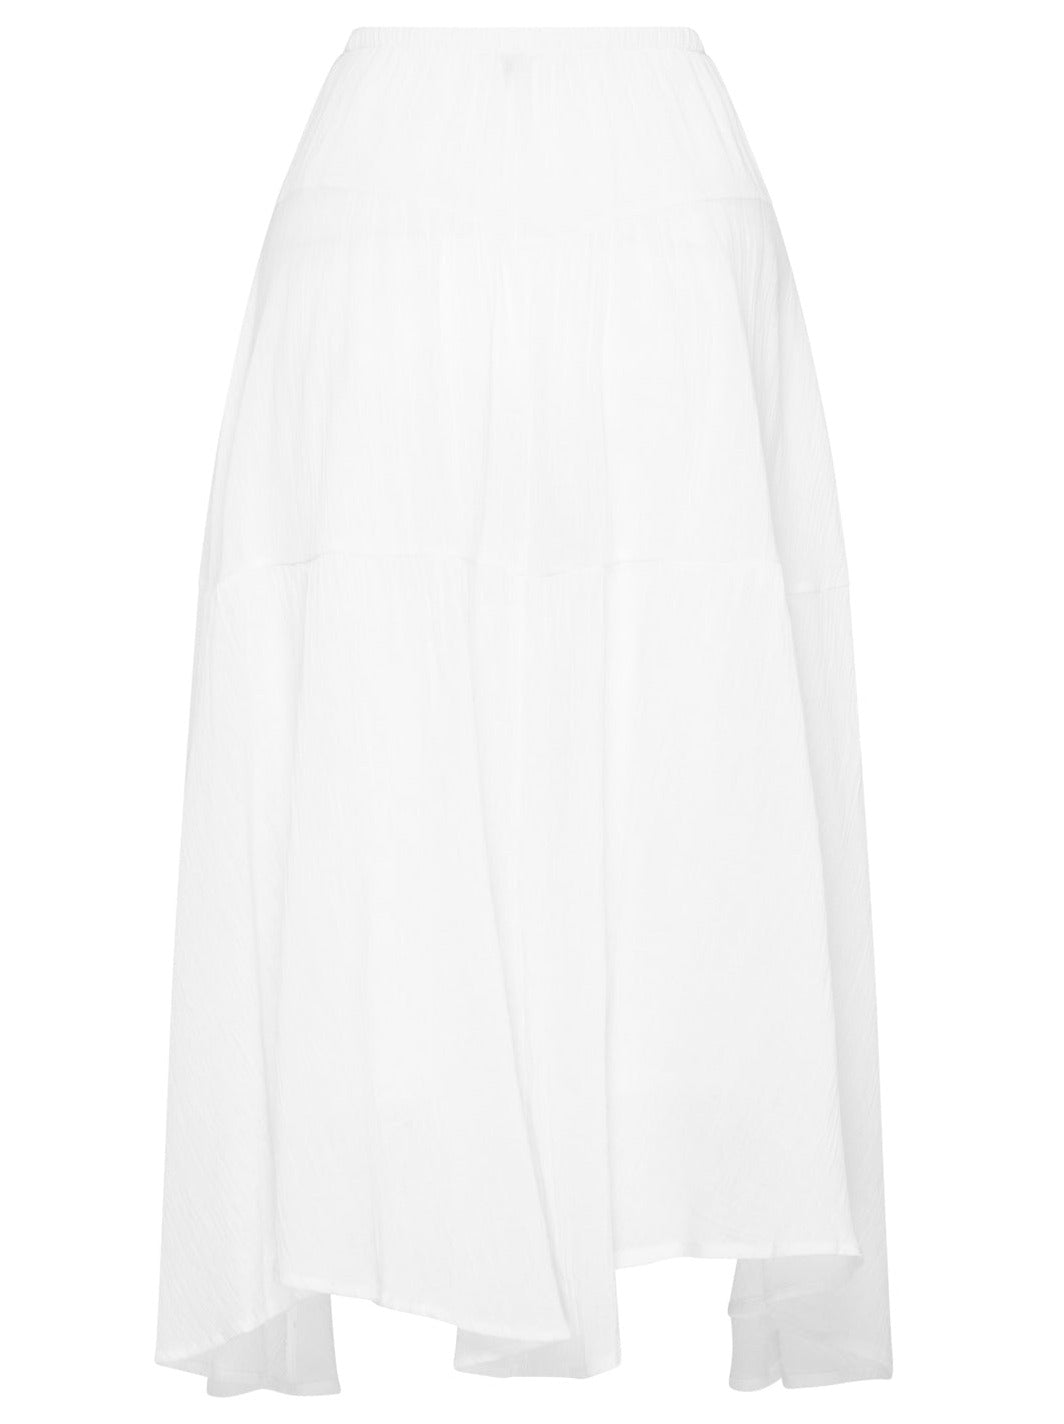 Womens boho white cotton maxi skirt ghost mannequin image back